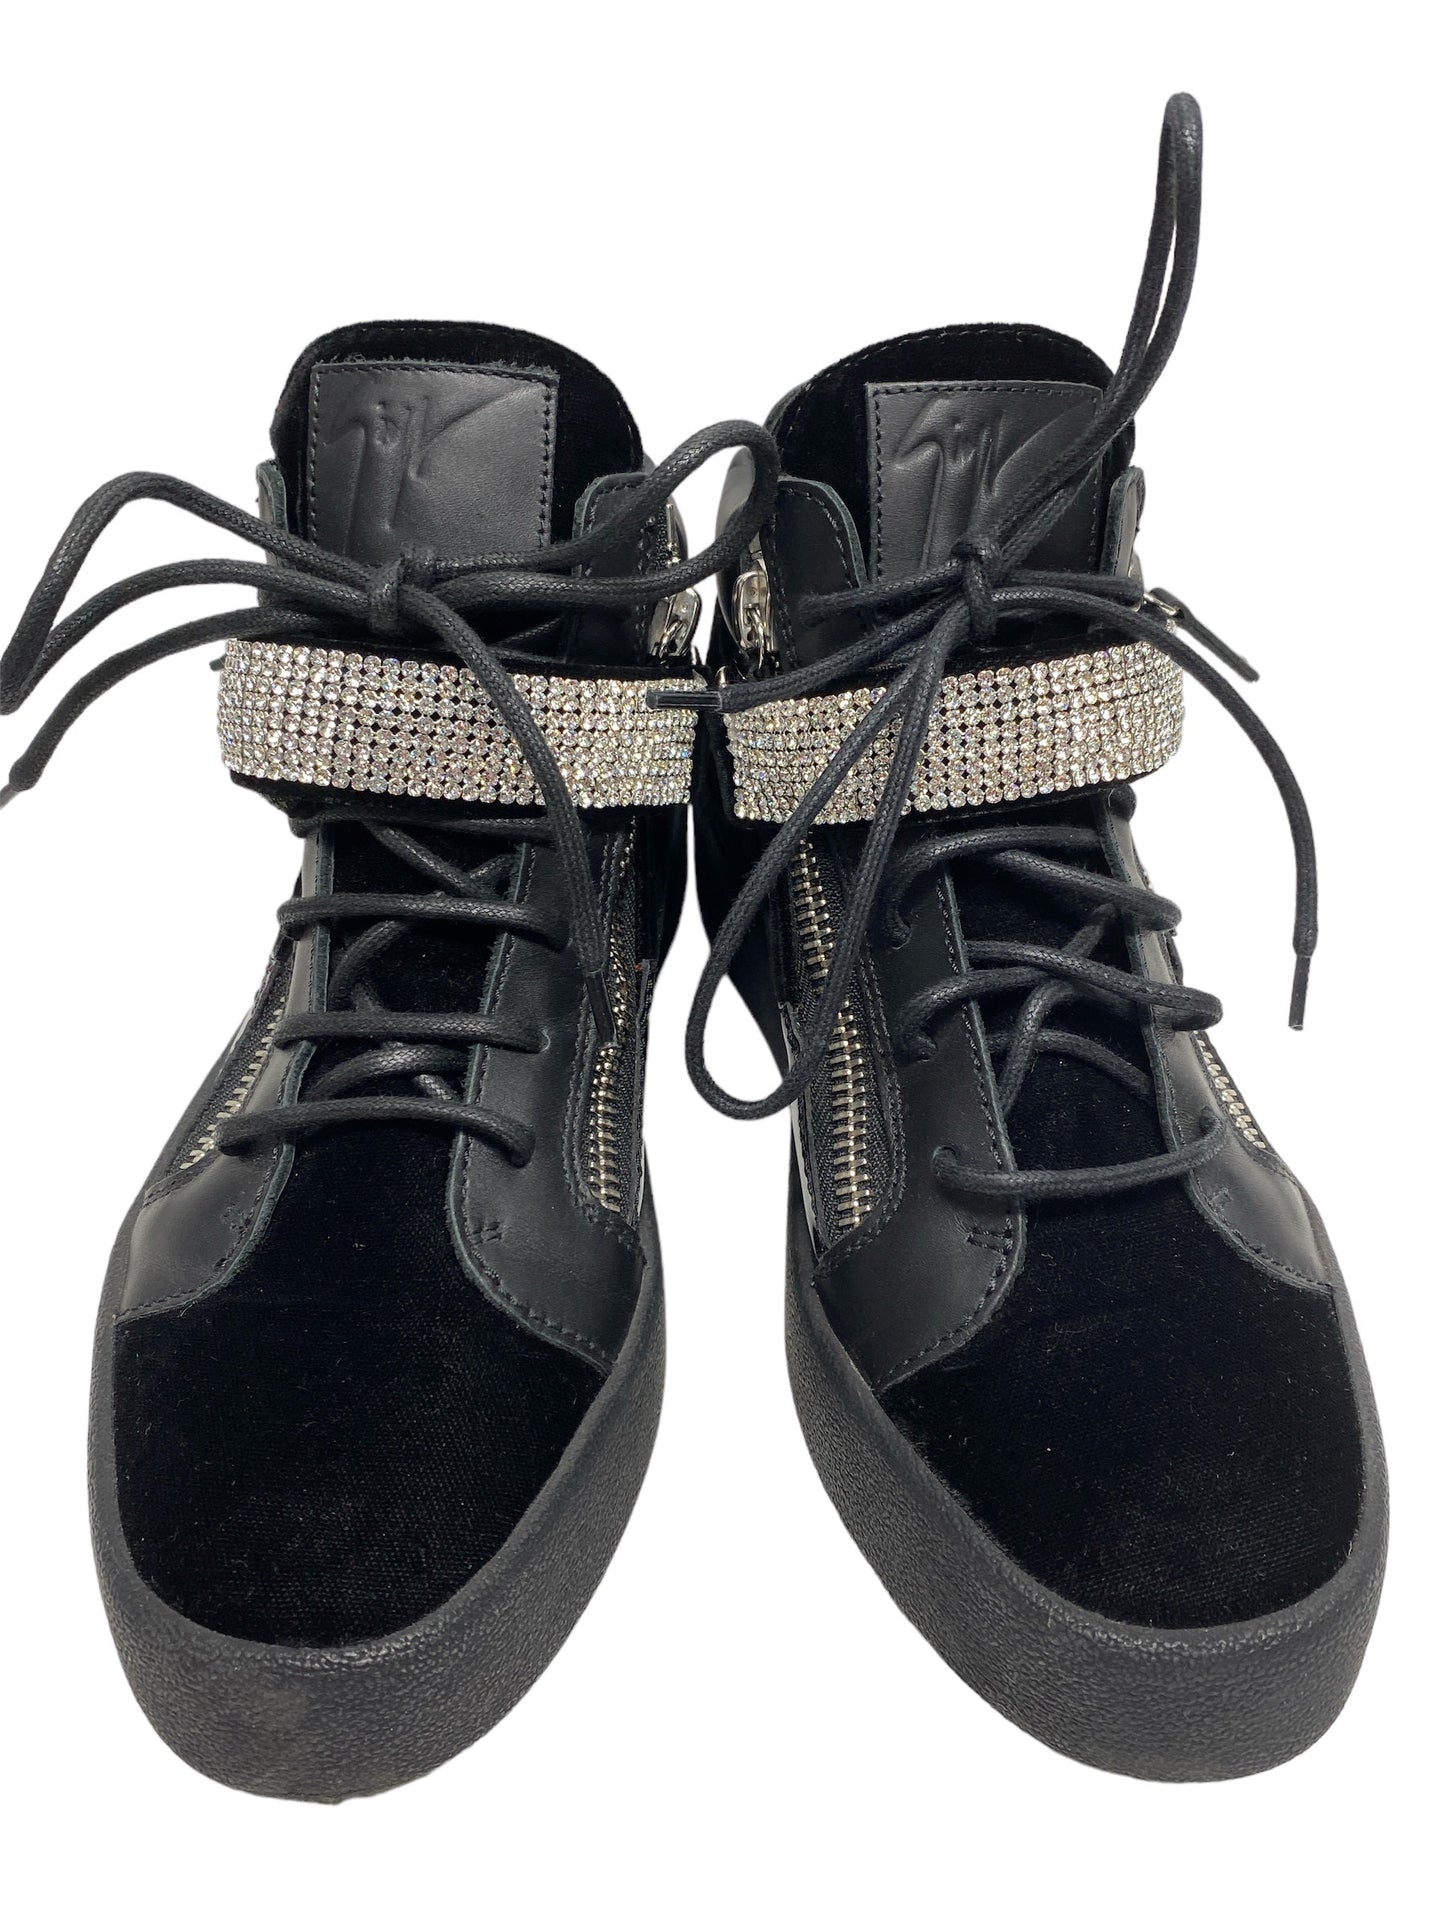 Shoes Athletic By Giuseppe Zanotti  Size: 8.5